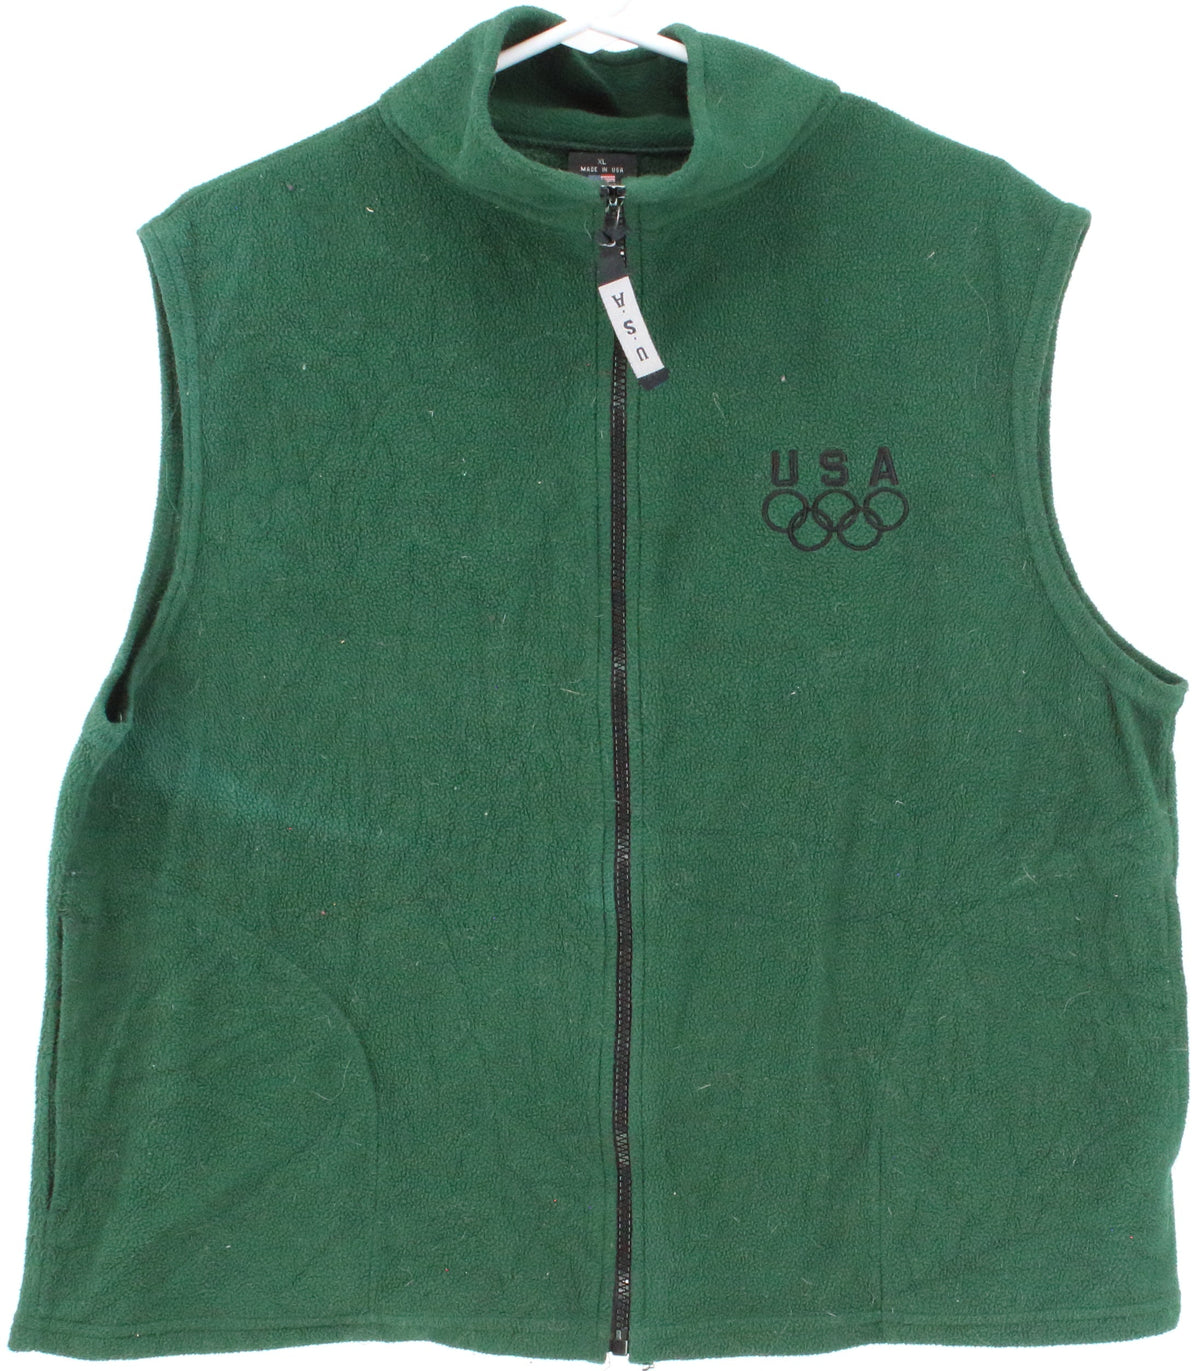 U.S.A Green Fleece Vest